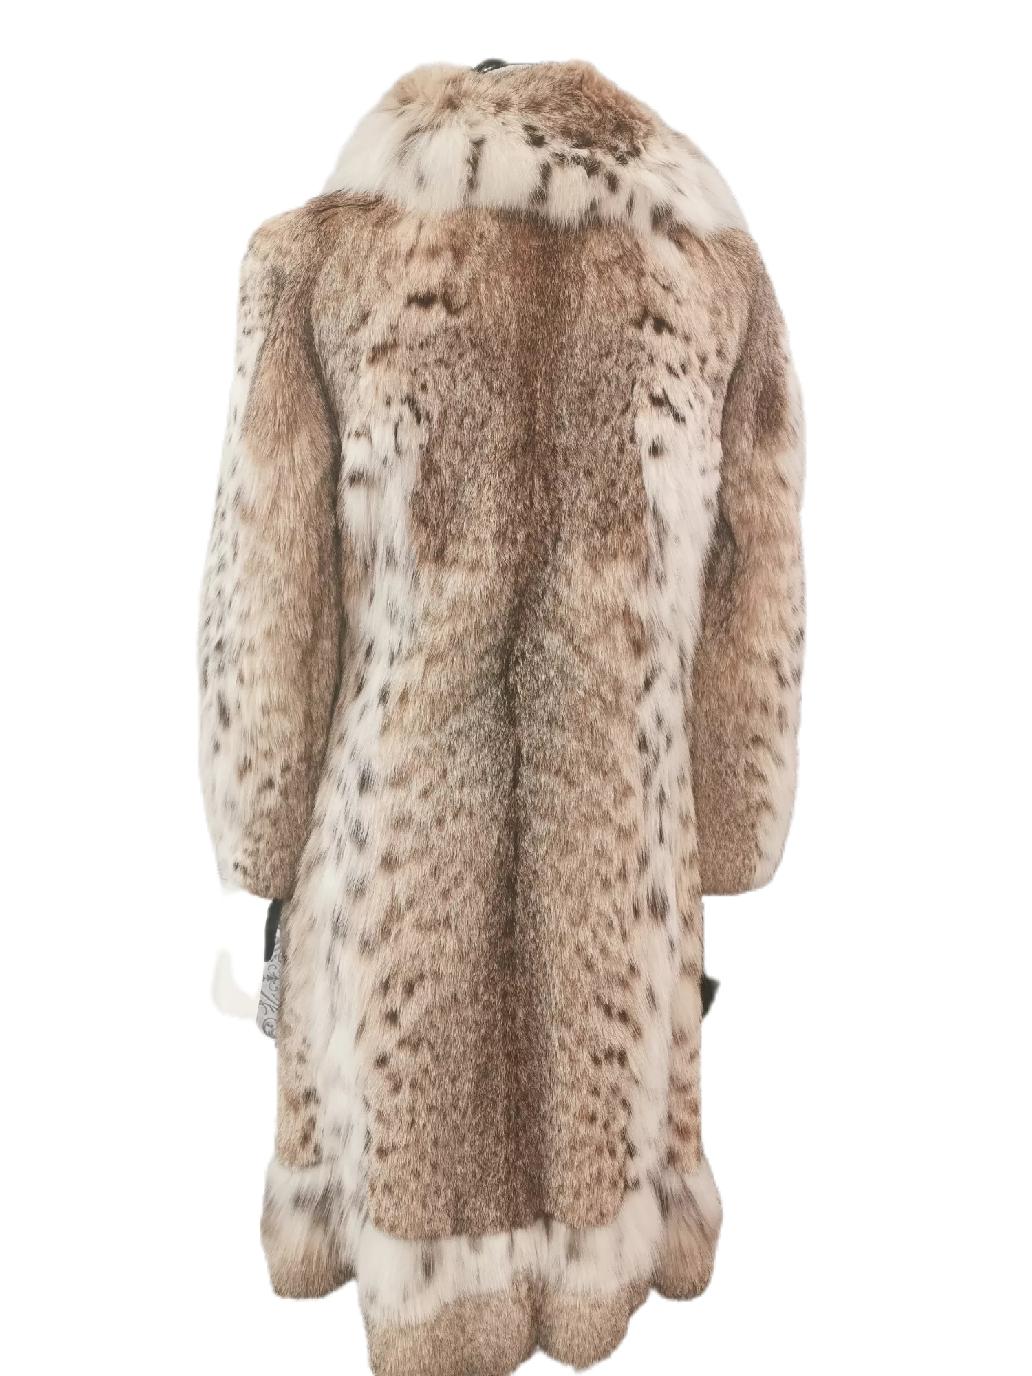 Brown Brand new Vintage lynx fur coat size 4-6 For Sale